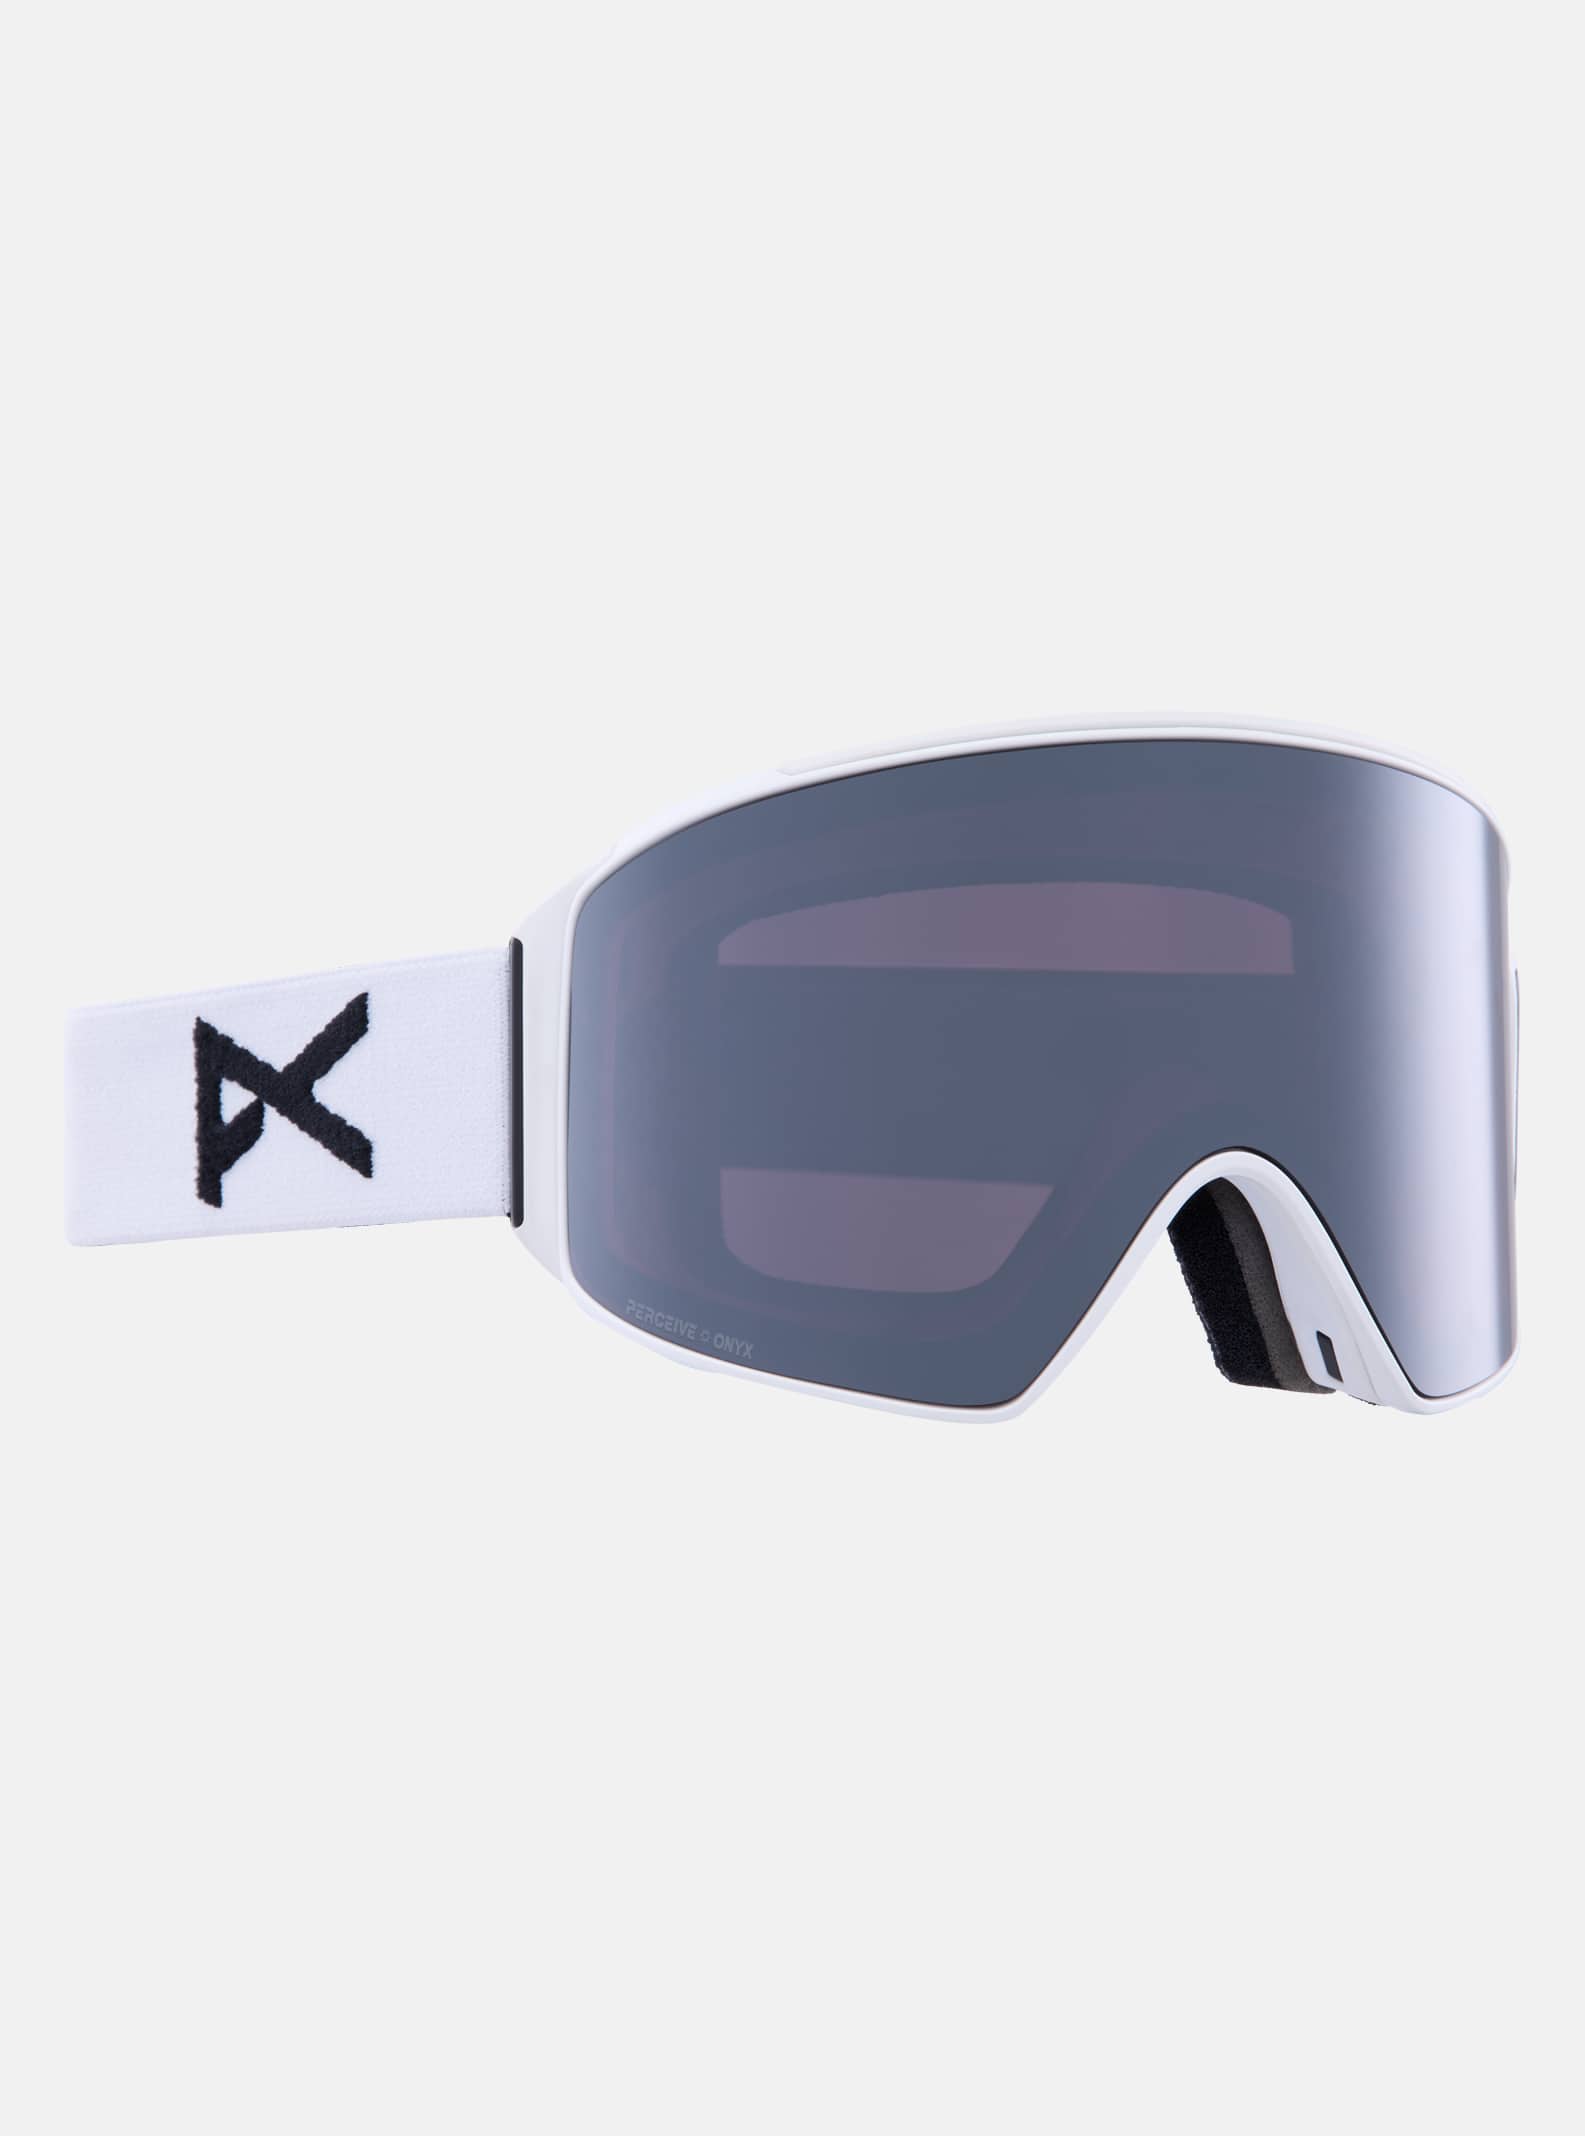 Anon M4 Low Bridge Fit Goggles (Cylindrical) + Bonus Lens + MFI® Face Mask